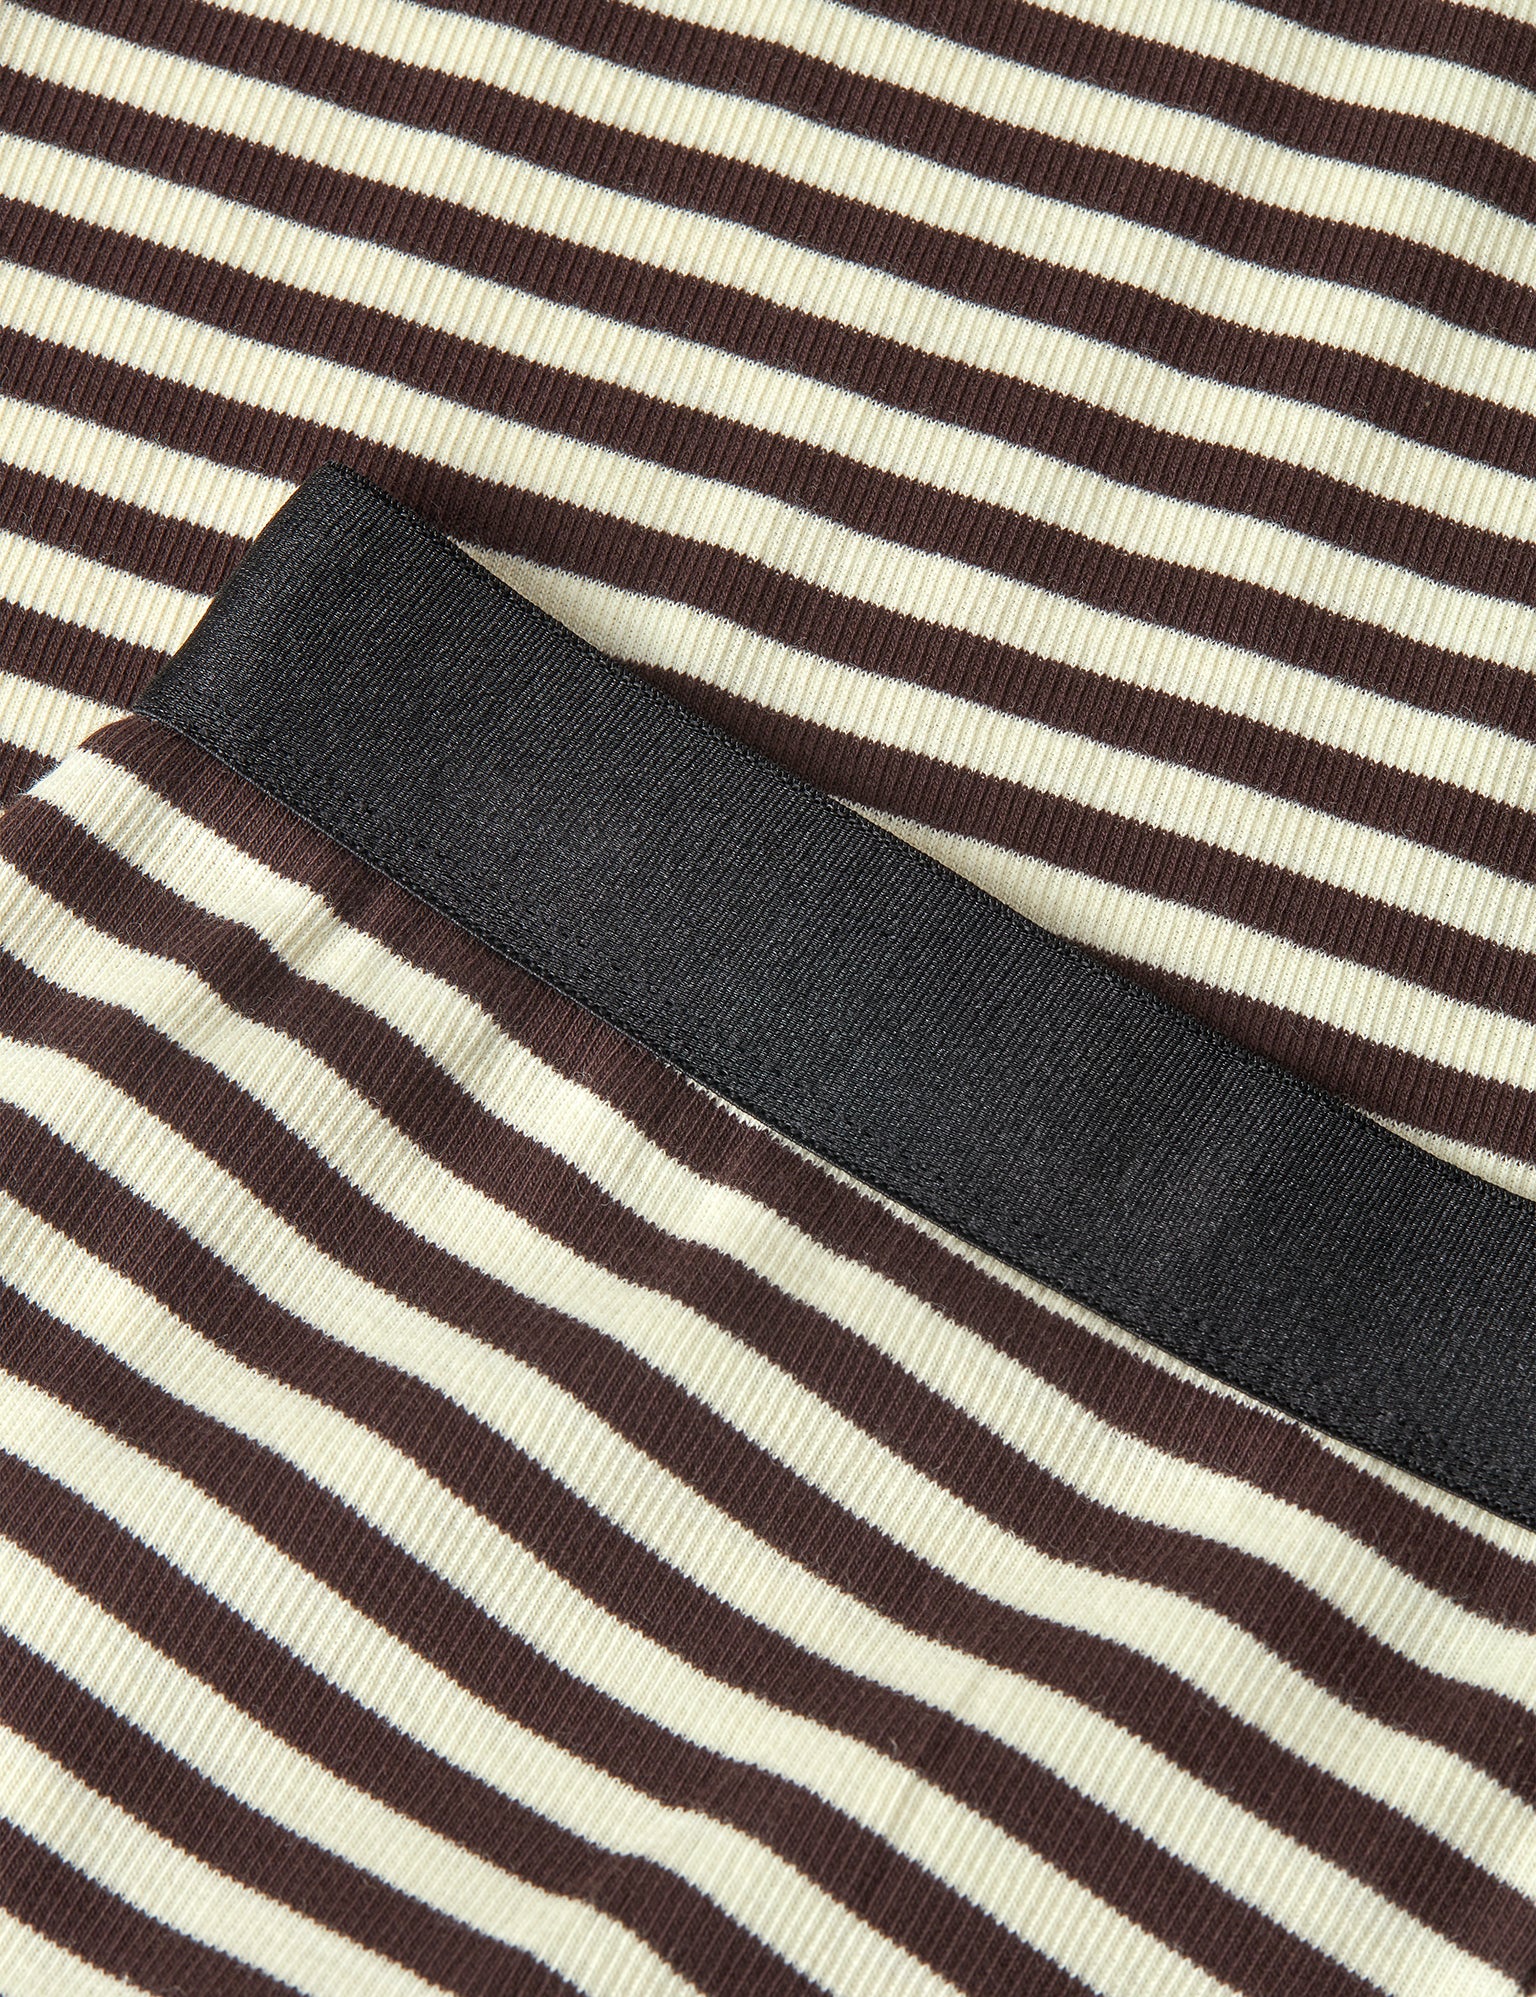 Black Cotton Stripe Lining (FD01)